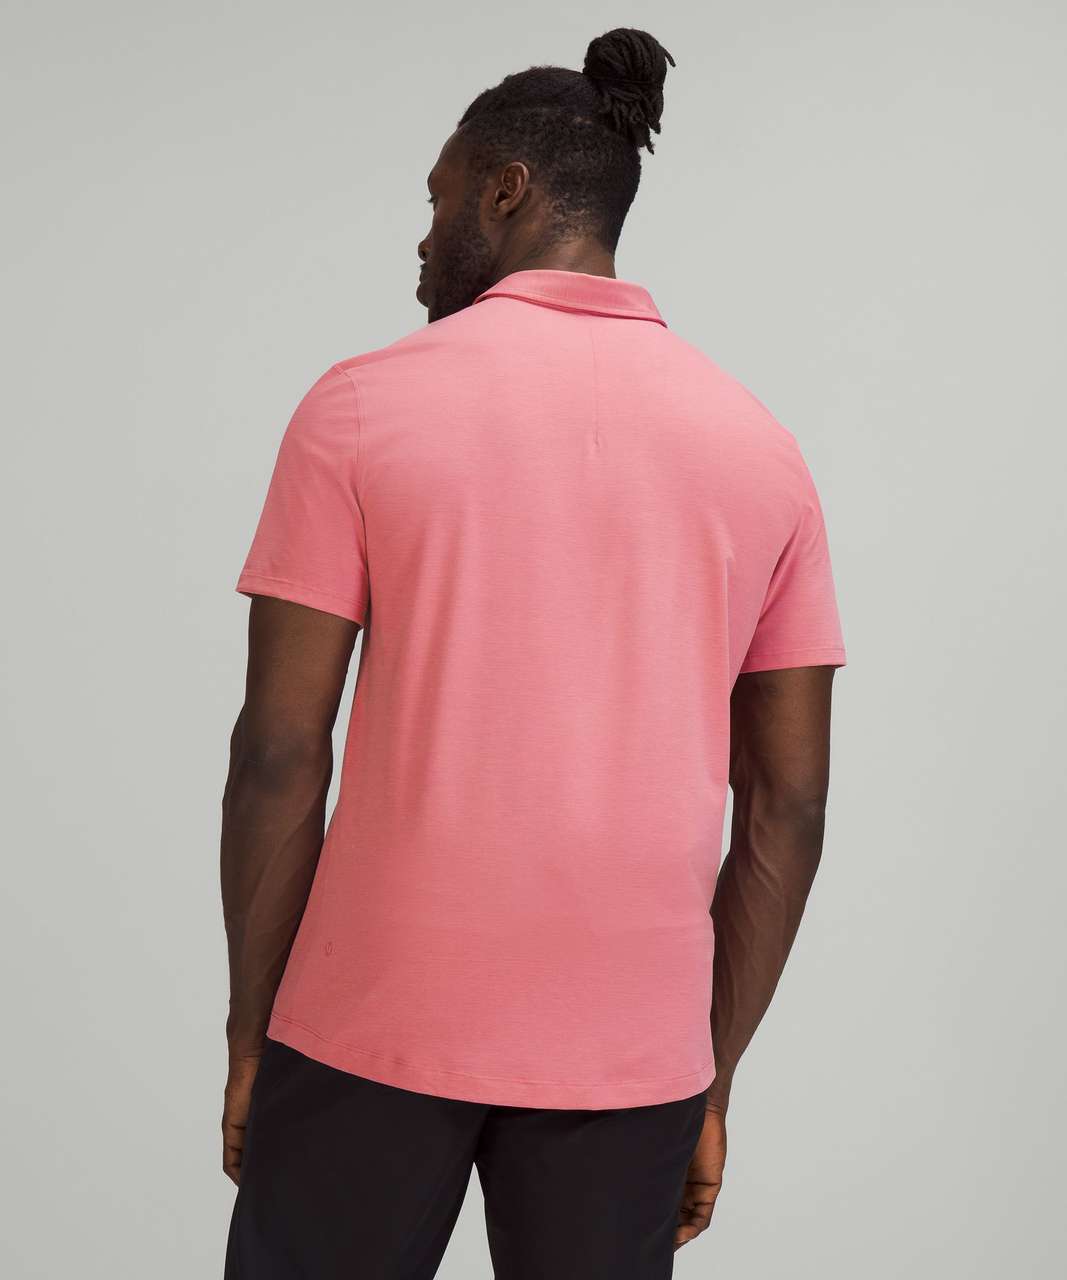 Lululemon Evolution Short Sleeve Polo Shirt - Pink Blossom